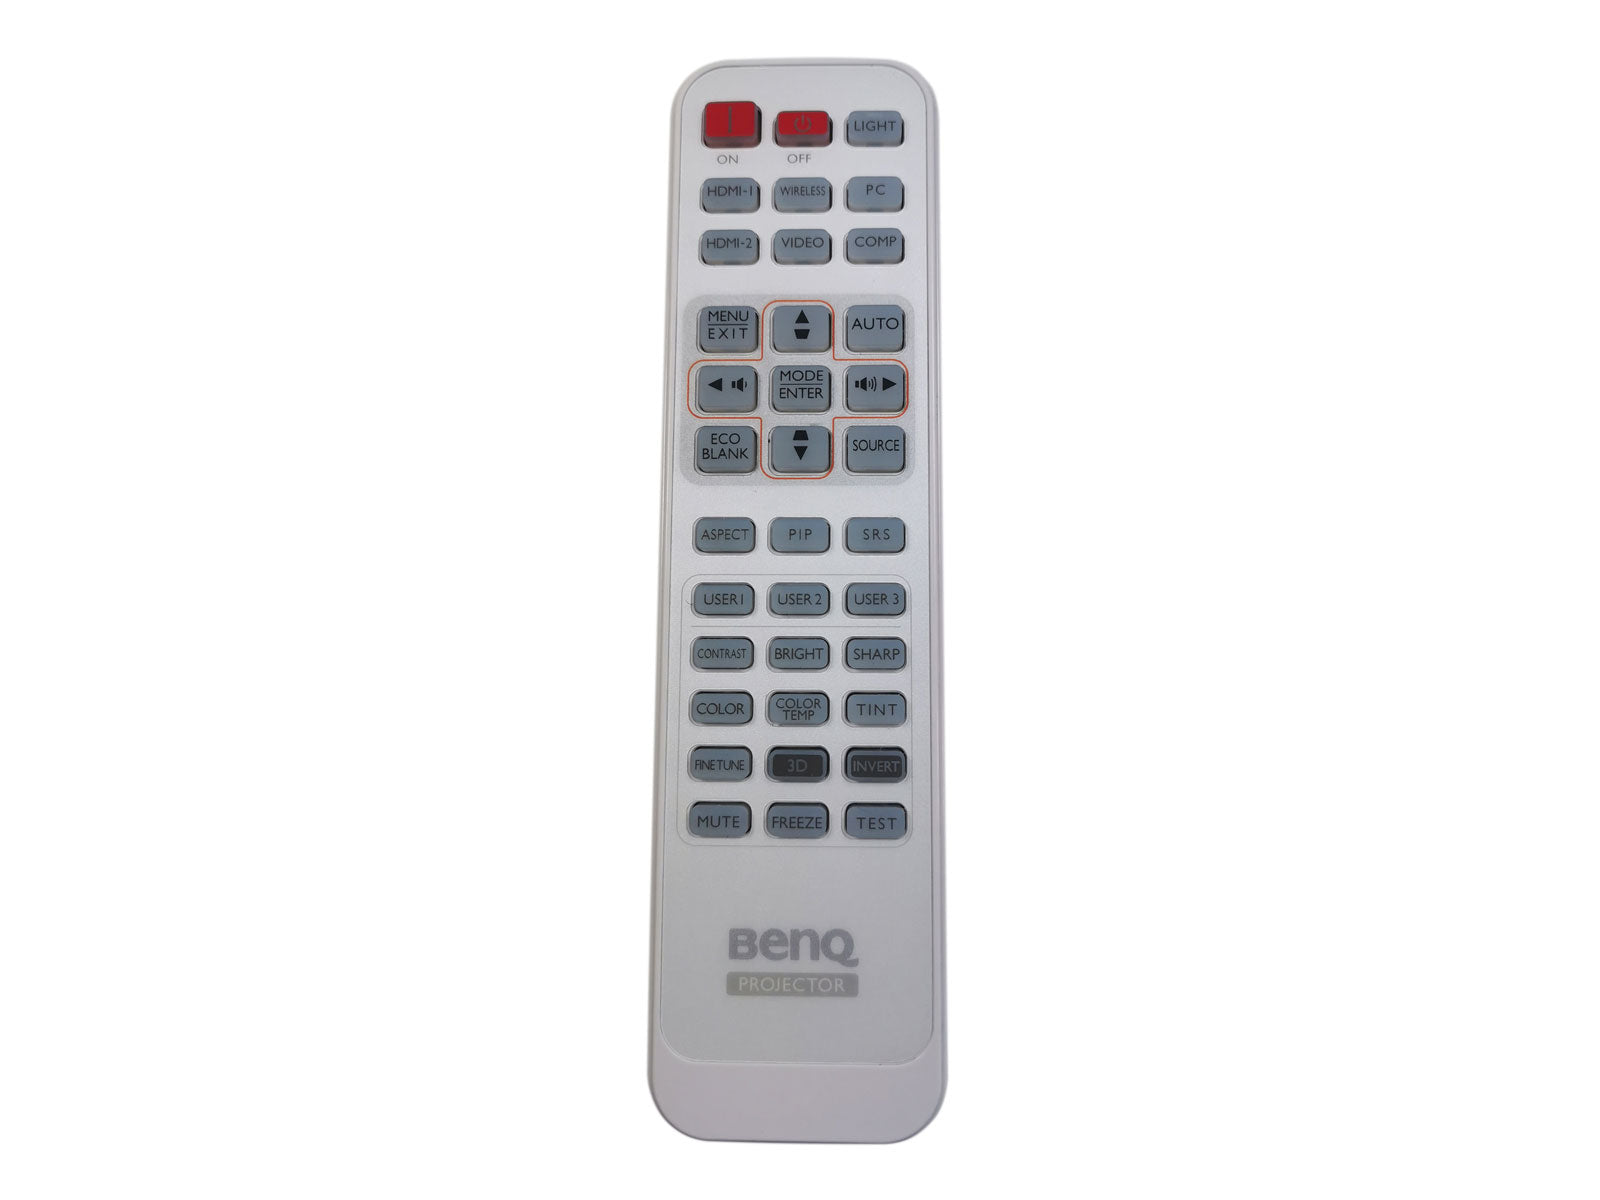 BENQ telecomando originale 5J.J7N06.001, RCV011 - Bild 1